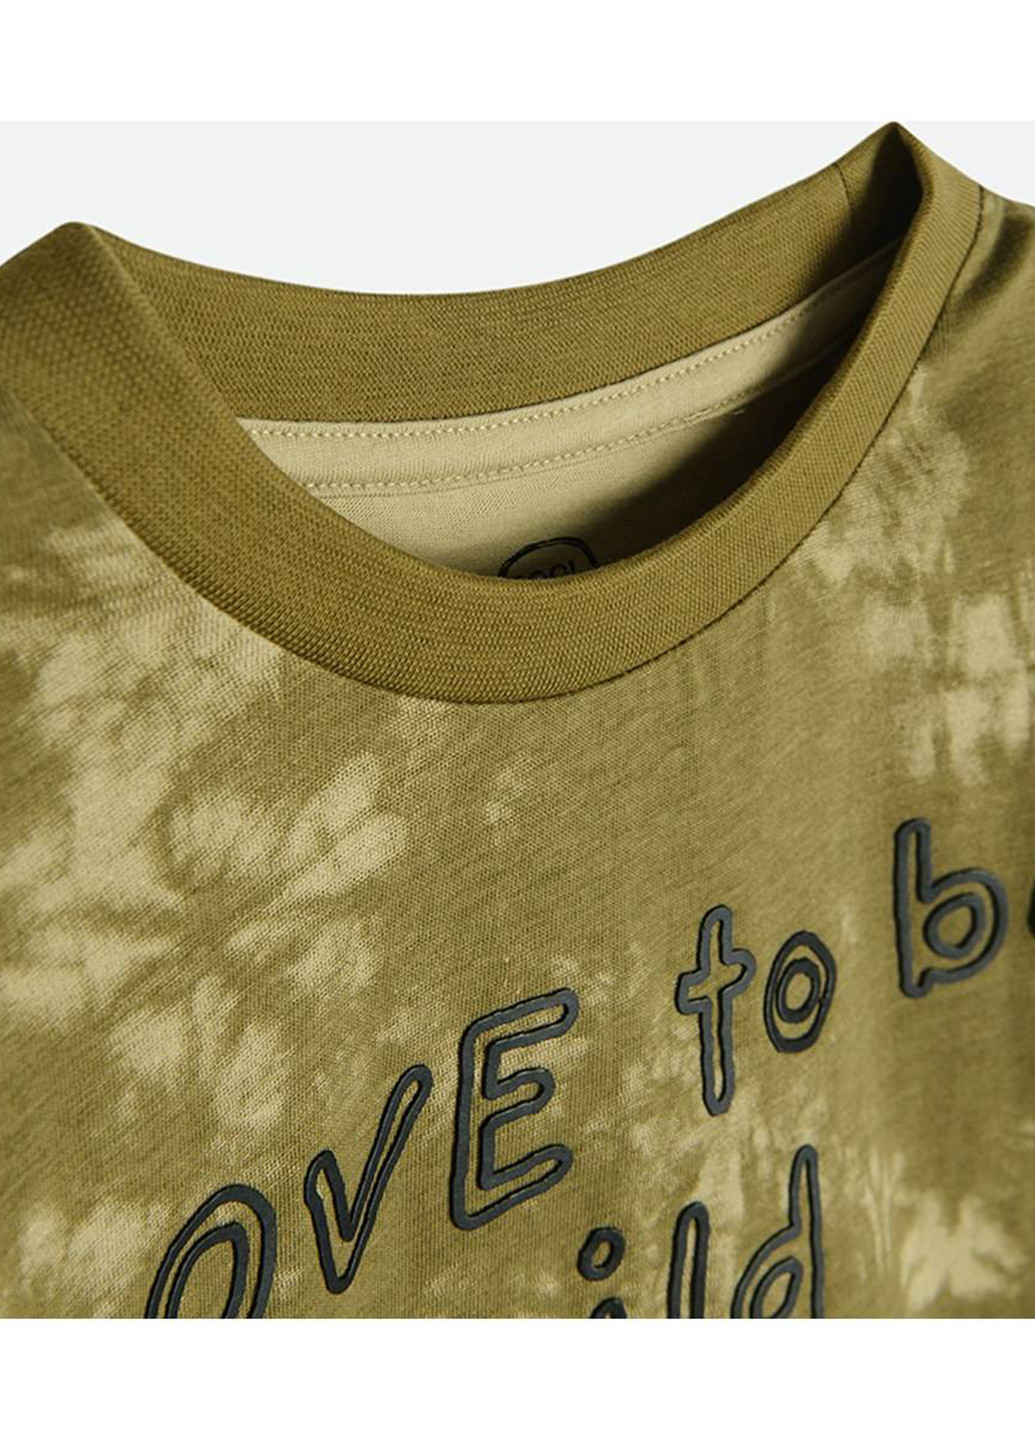 Хаки (оливковая) летняя футболка Cool Club